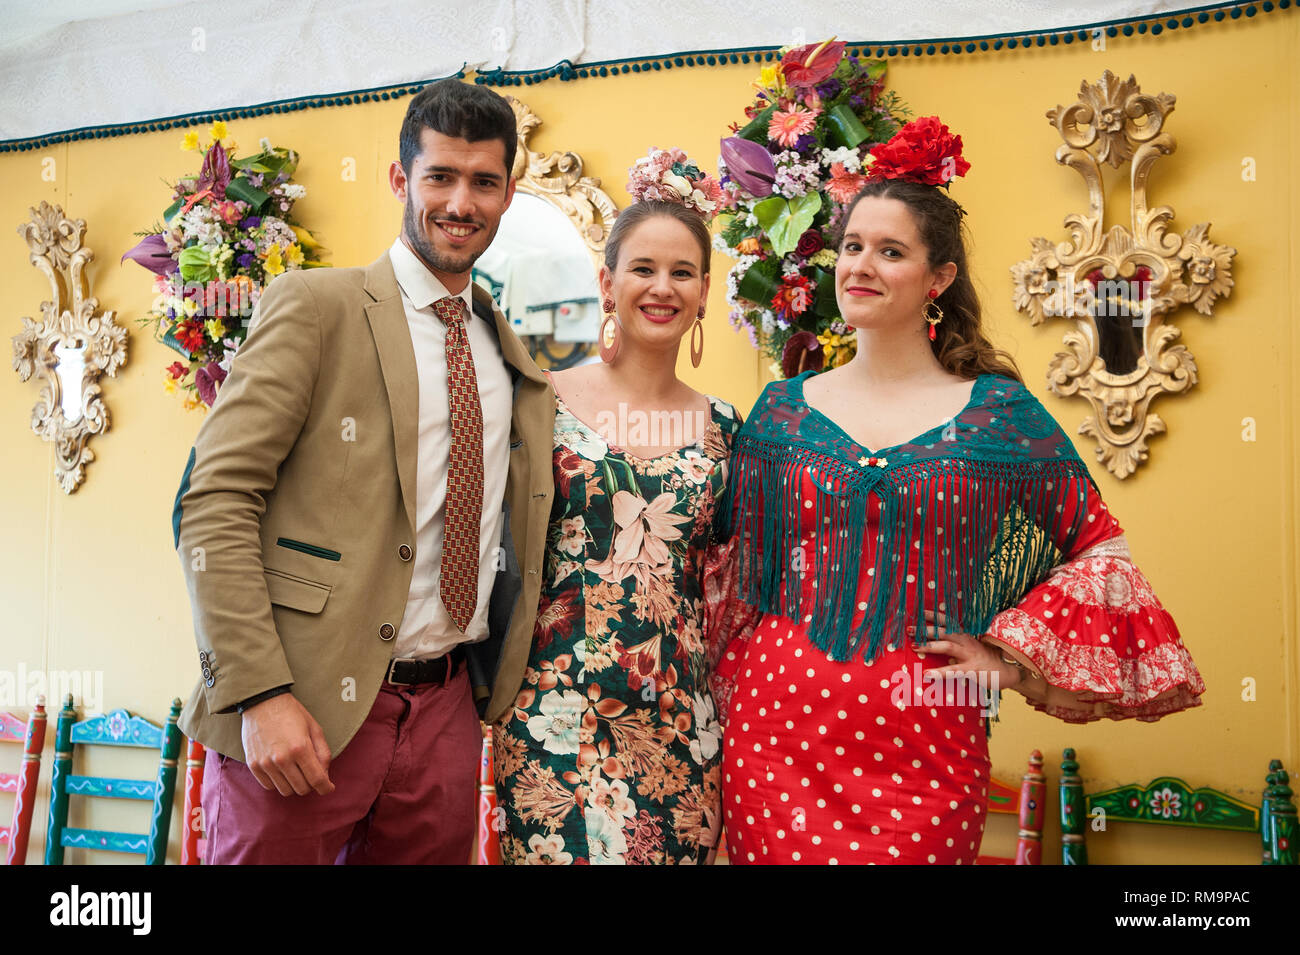 SPAIN, SEVILLE: The ‘Feria de April’, the April Fair, is Seville’s most important festival besides the Semana Santa, the Easter week. A whole neighbou Stock Photo